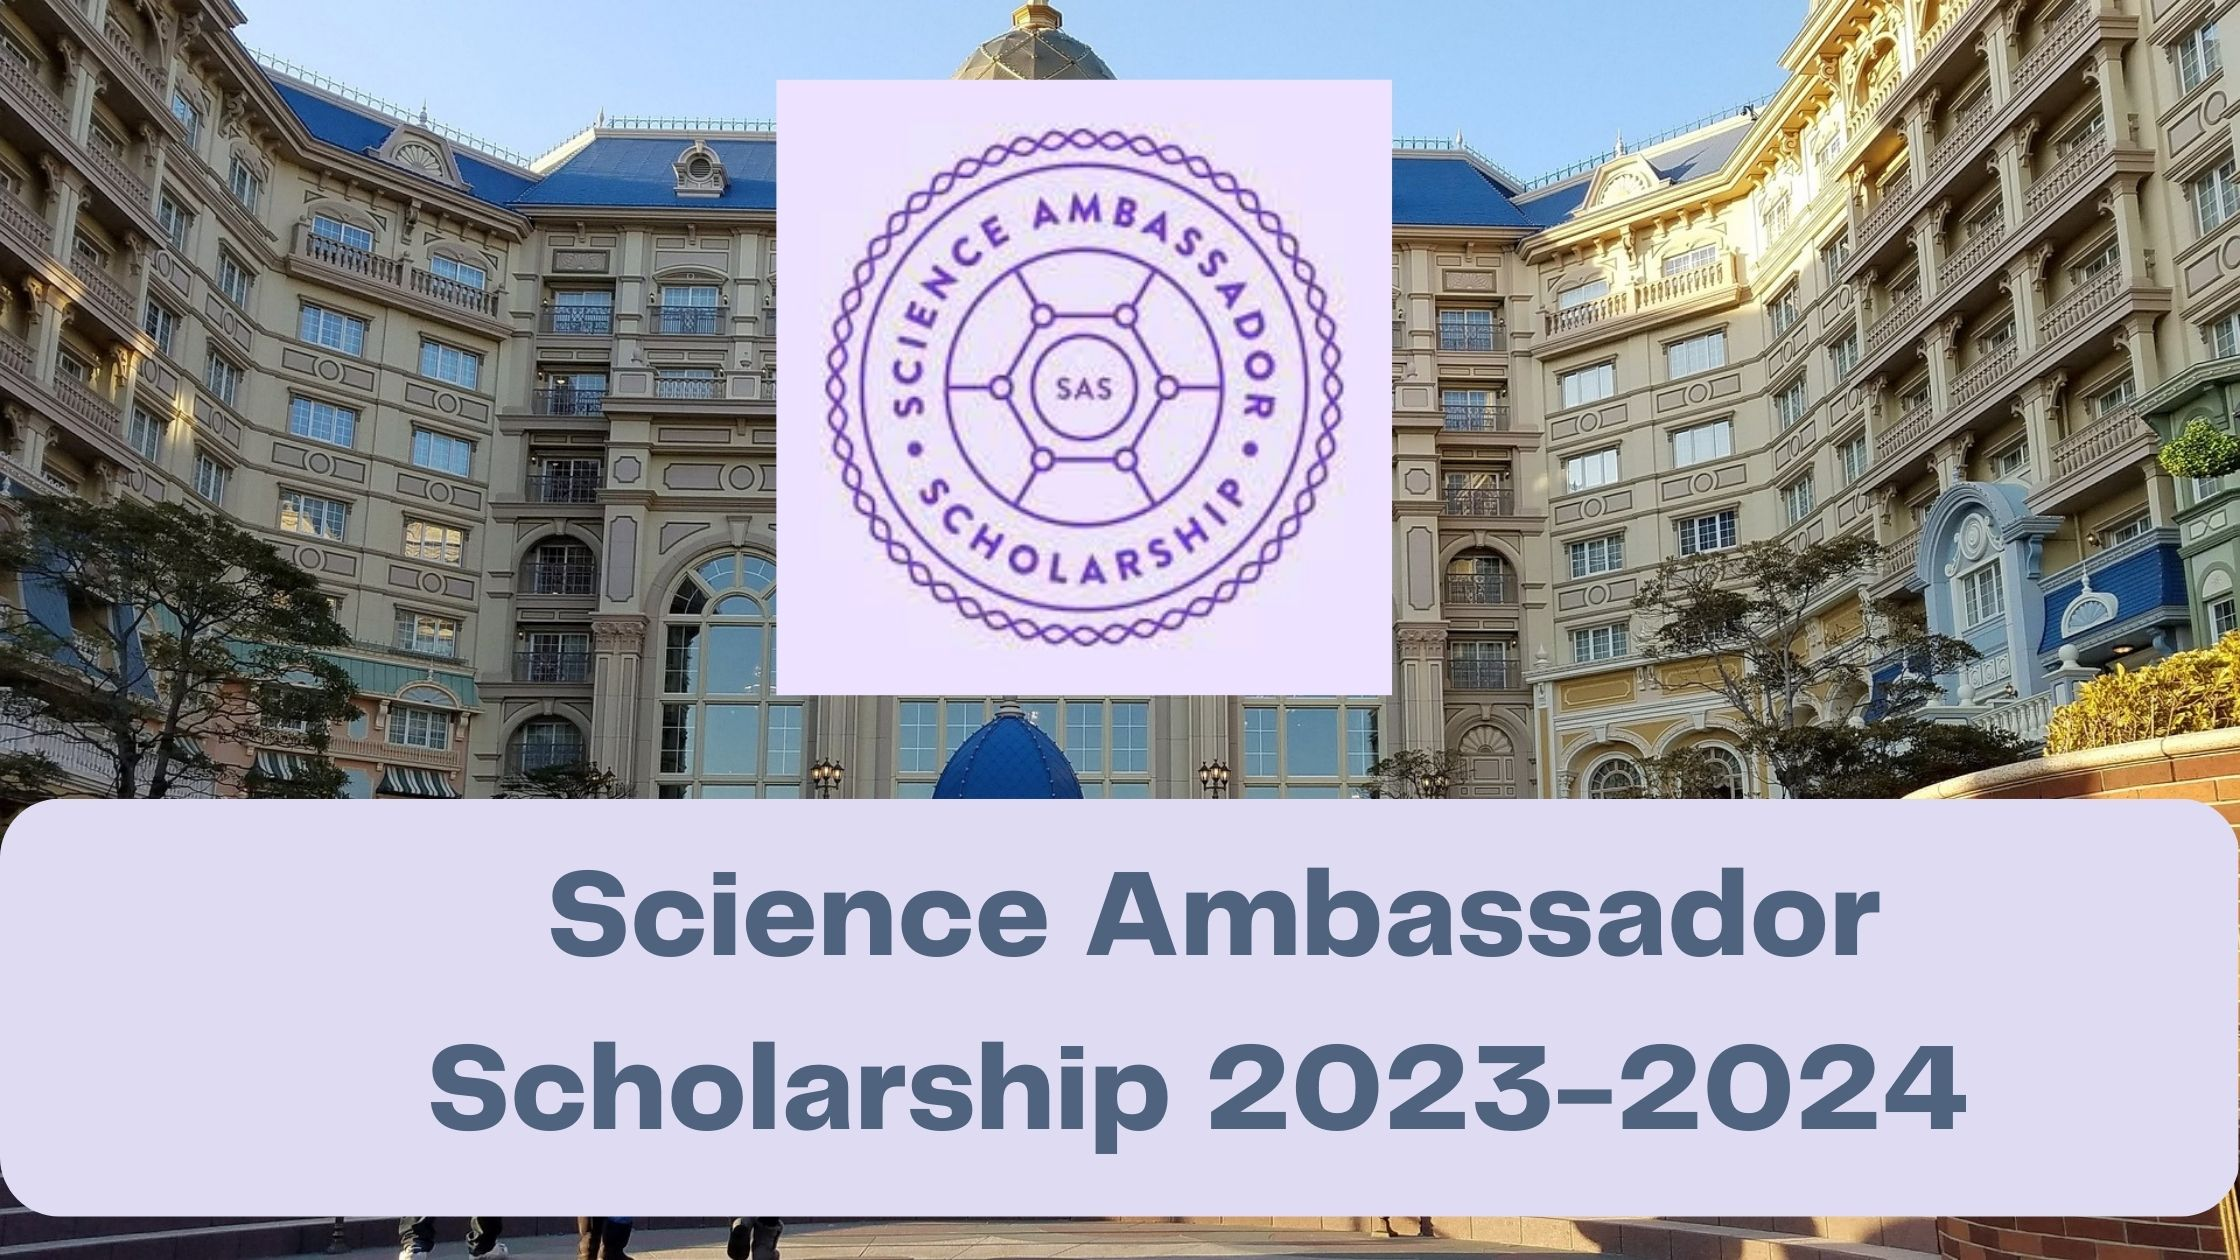 Science Ambassador Scholarship 2023-2024